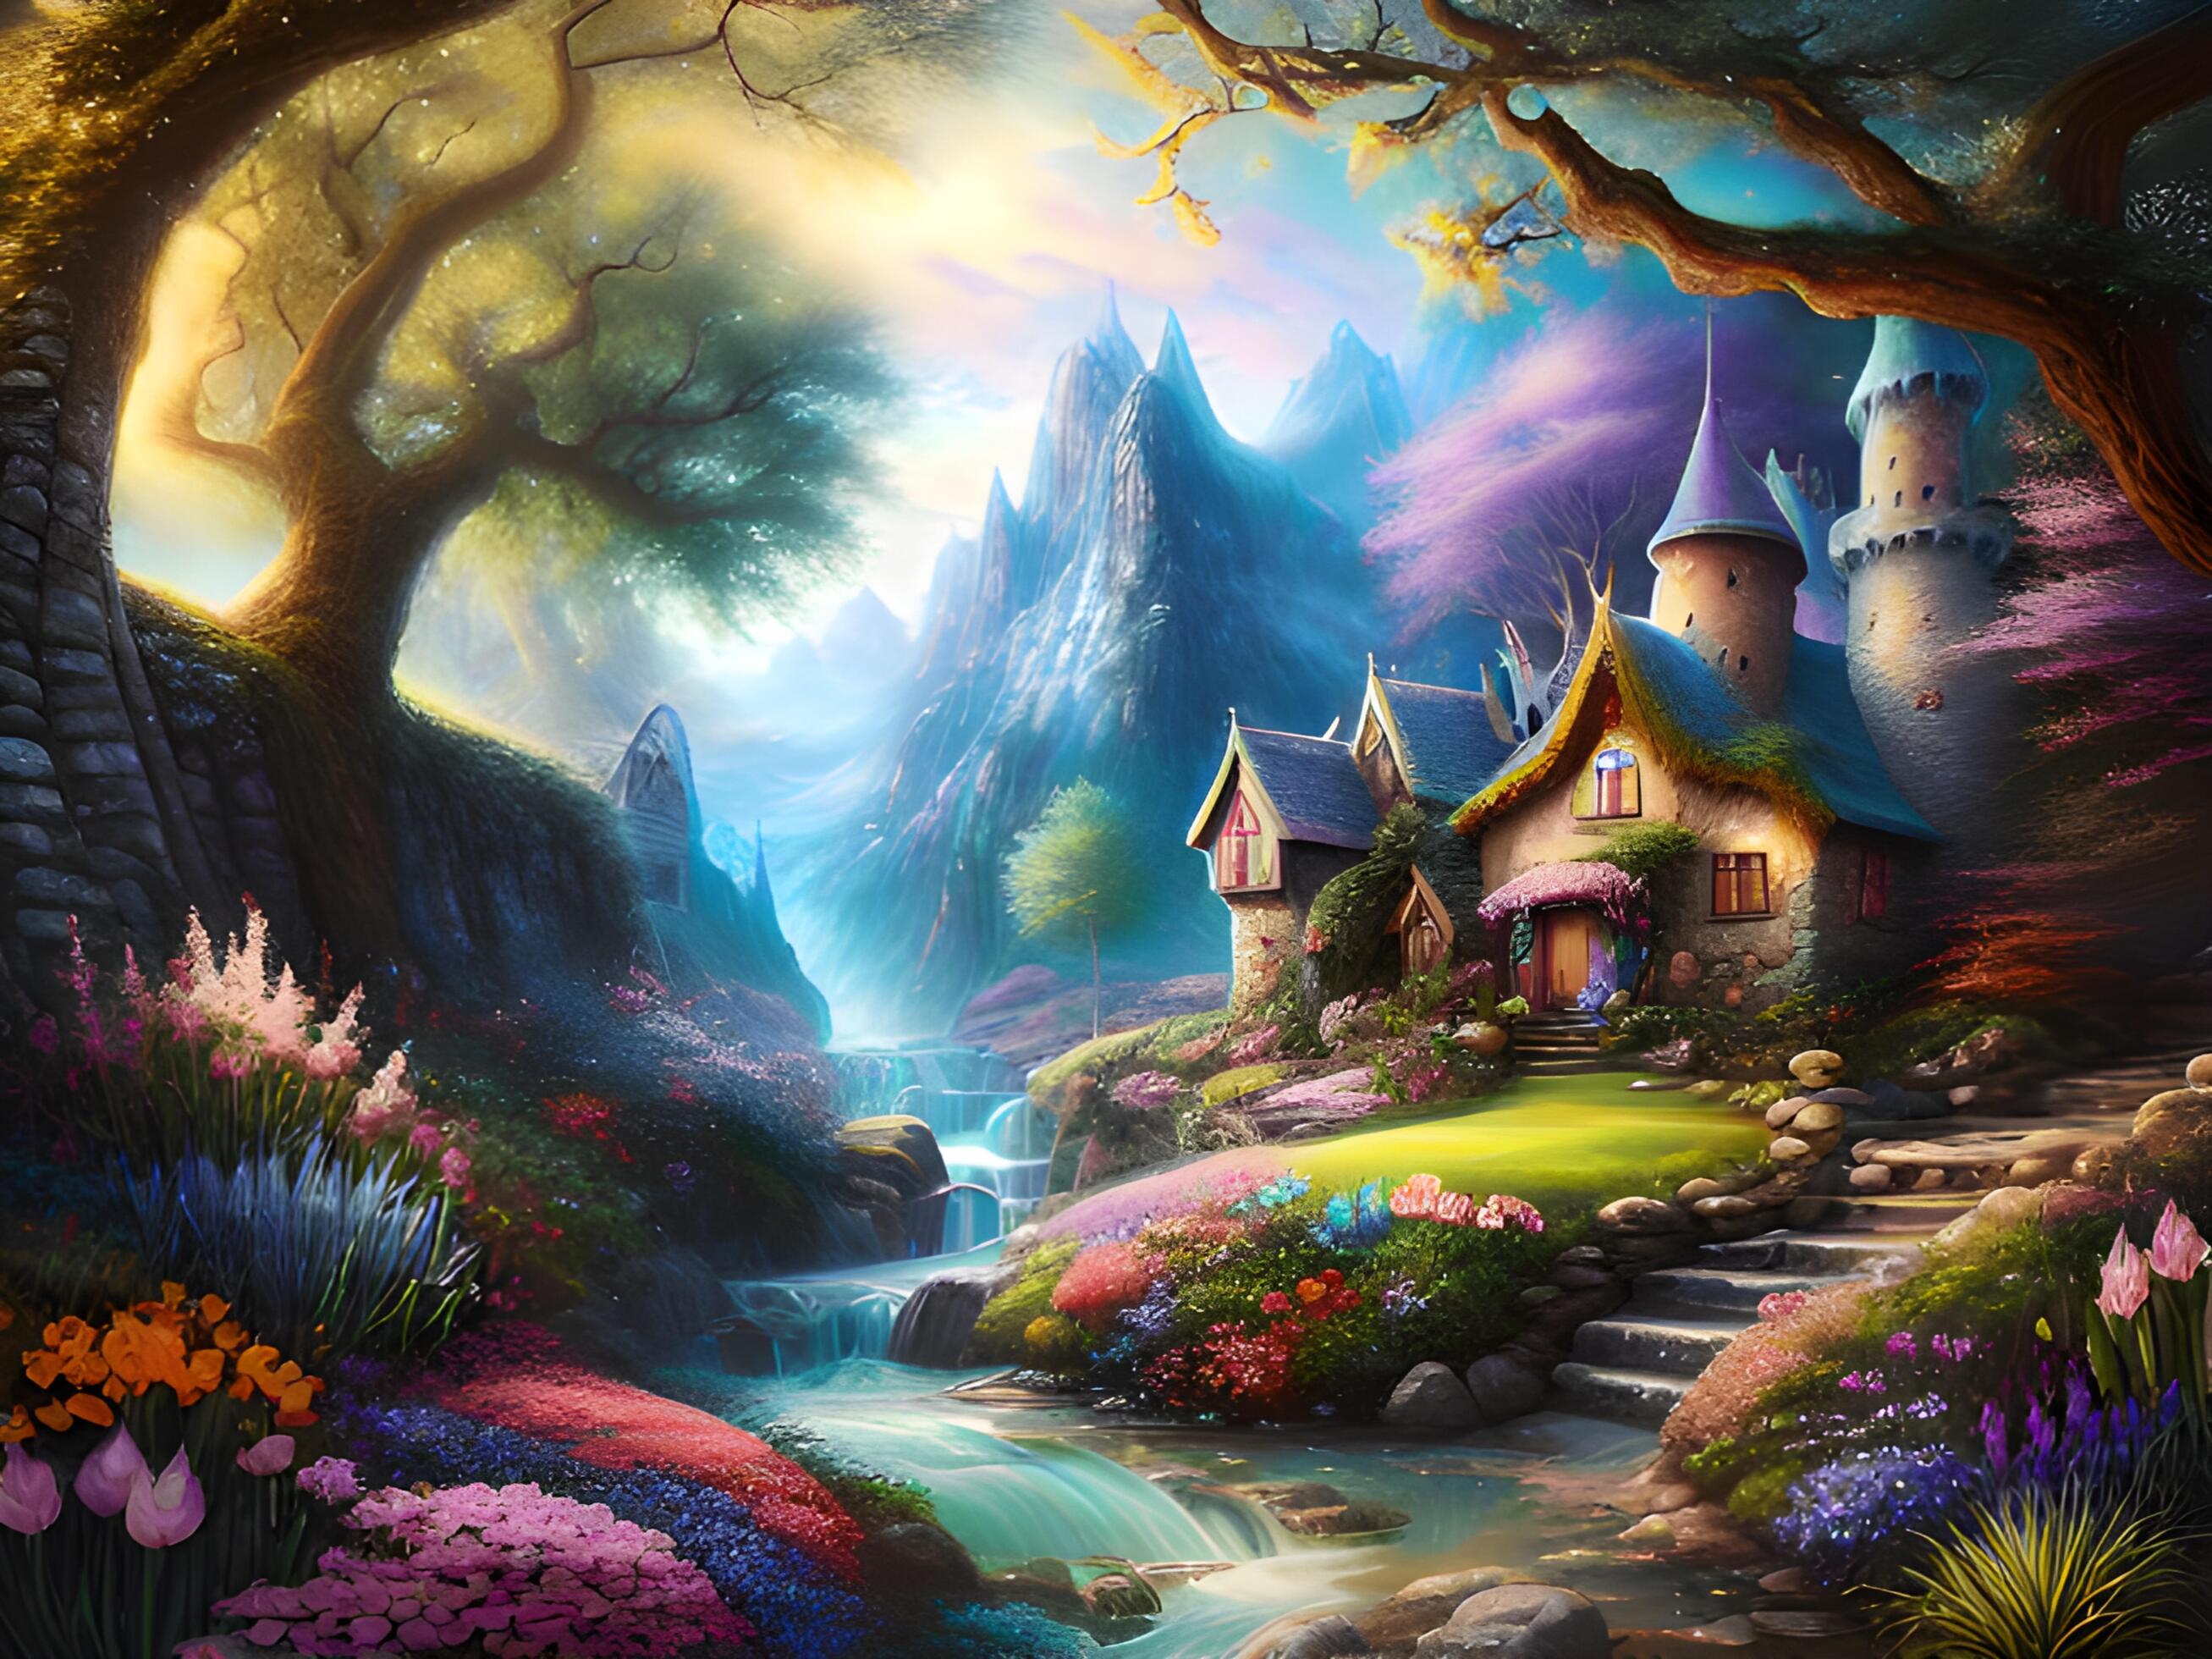 fairy tale fantasy landscape with a magic fairytale castle ...